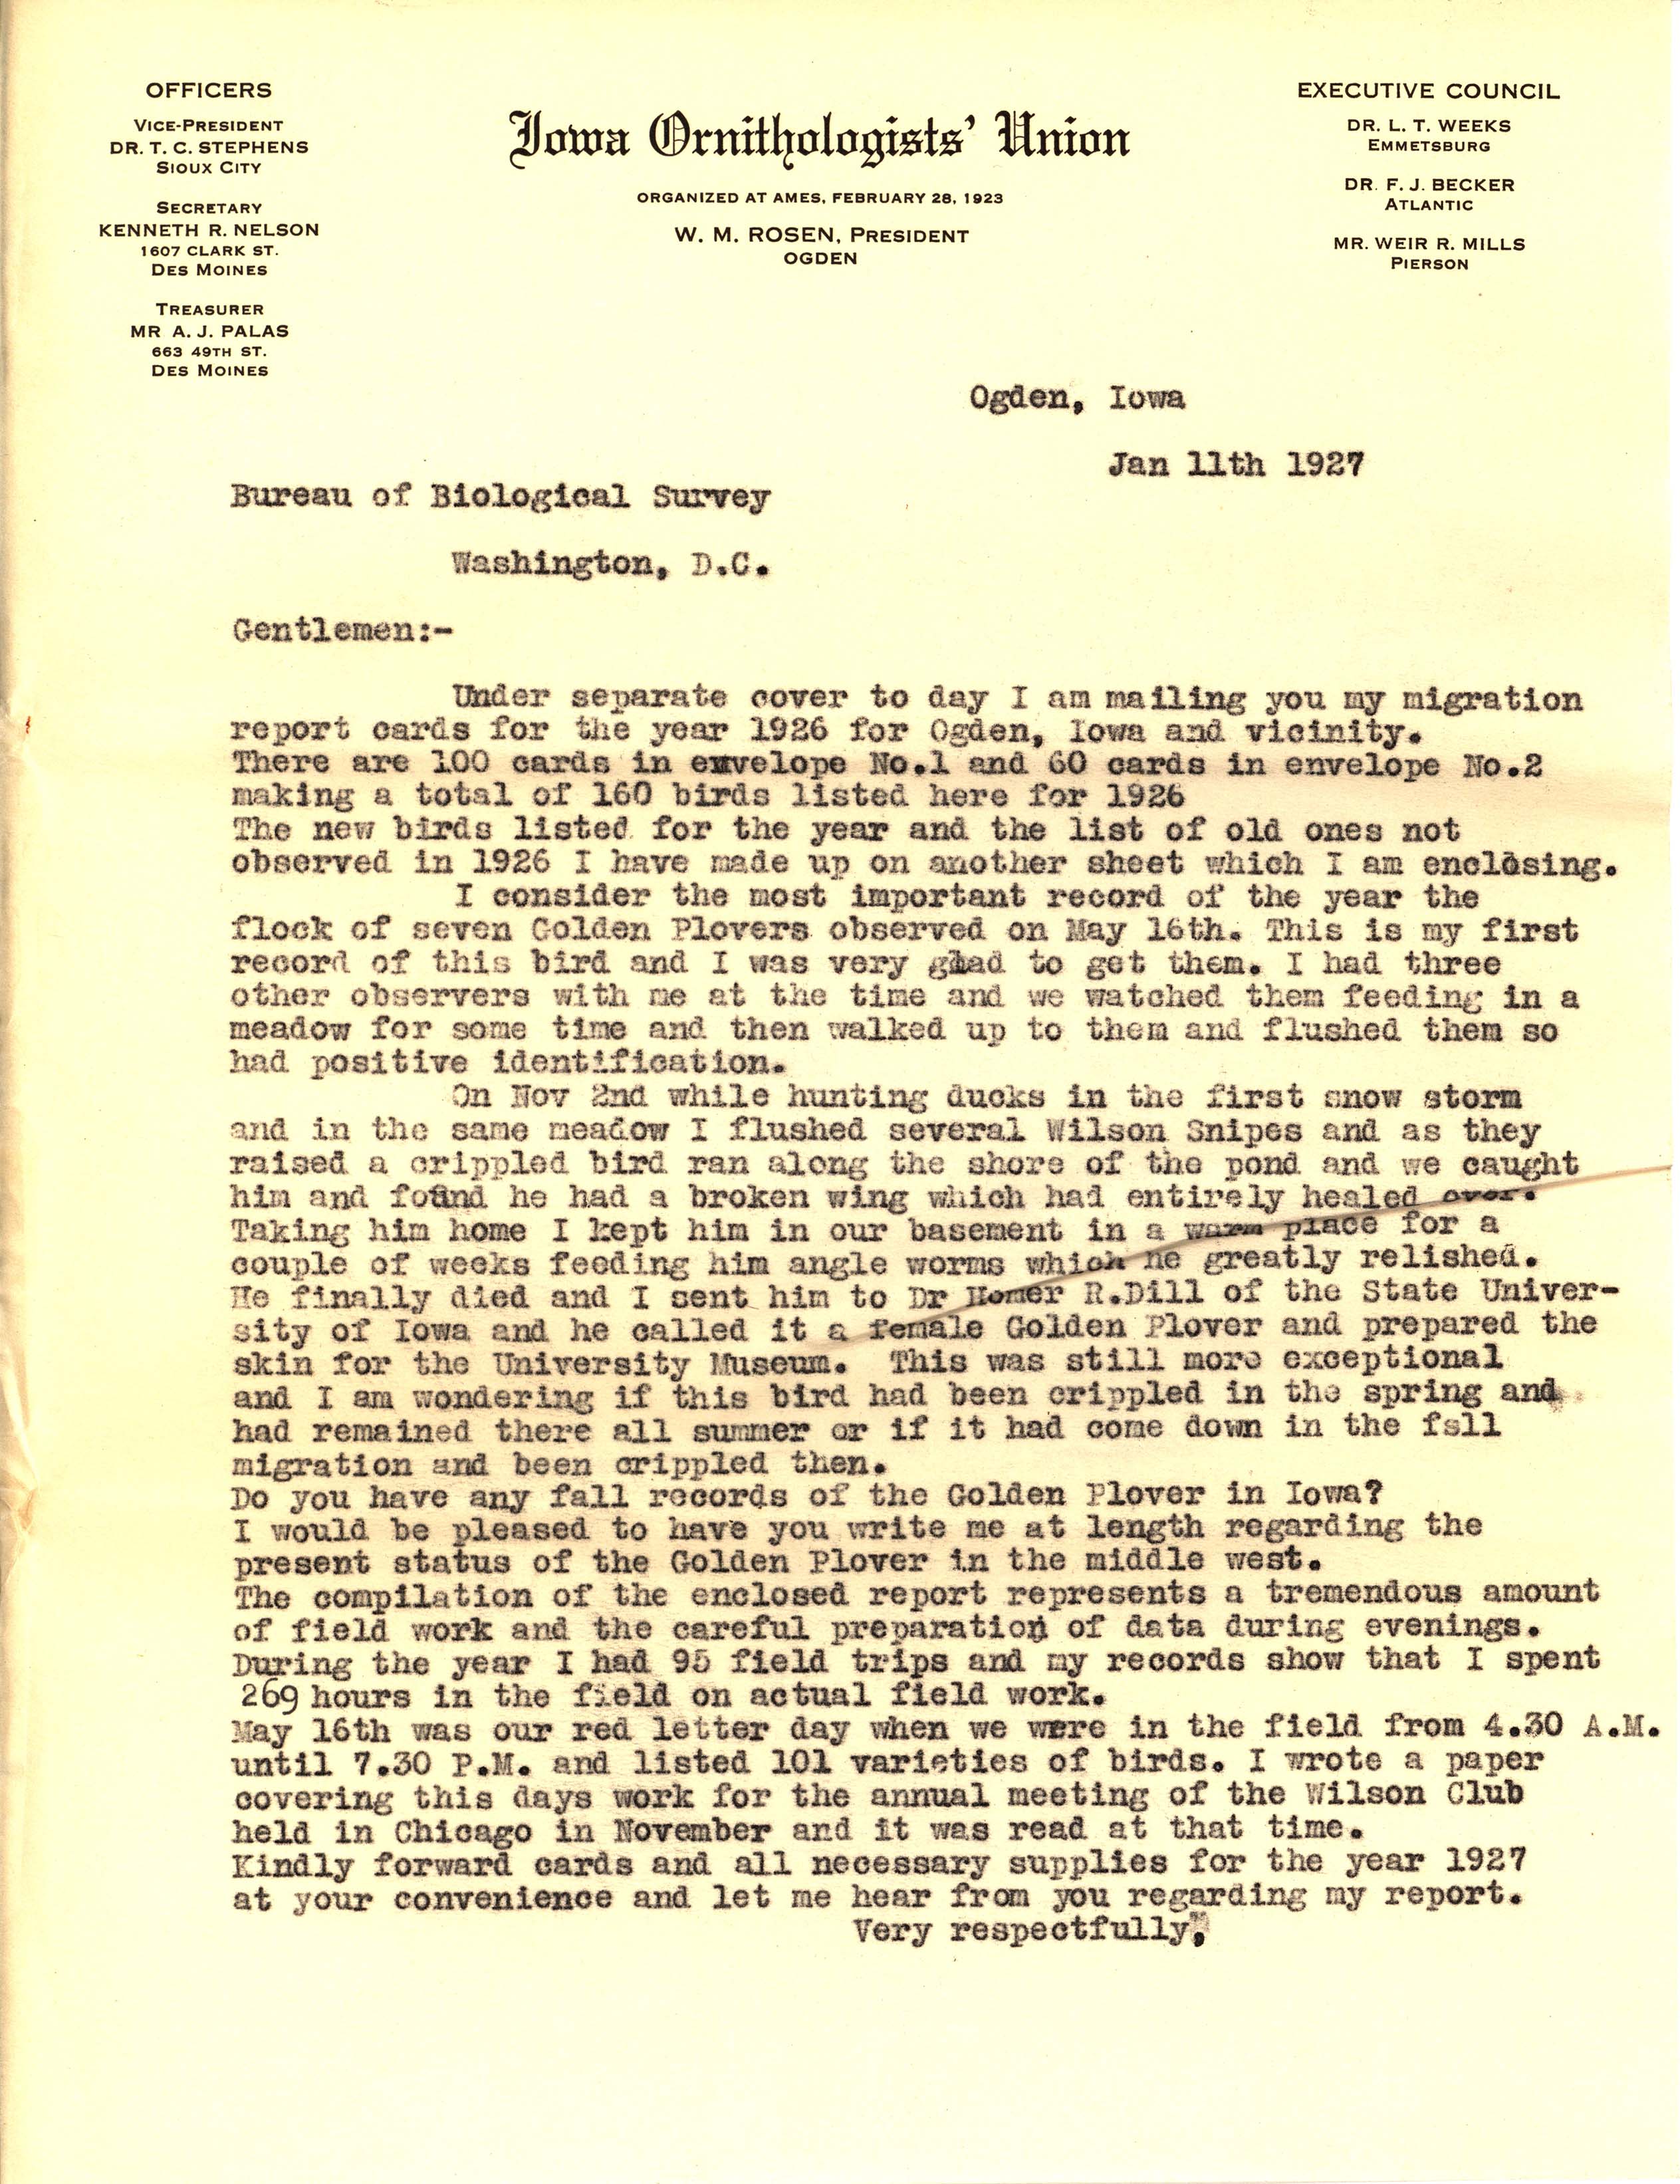 Walter Rosene letter to Bureau of Biological Survey regarding birds sighted in 1926, January 11, 1927